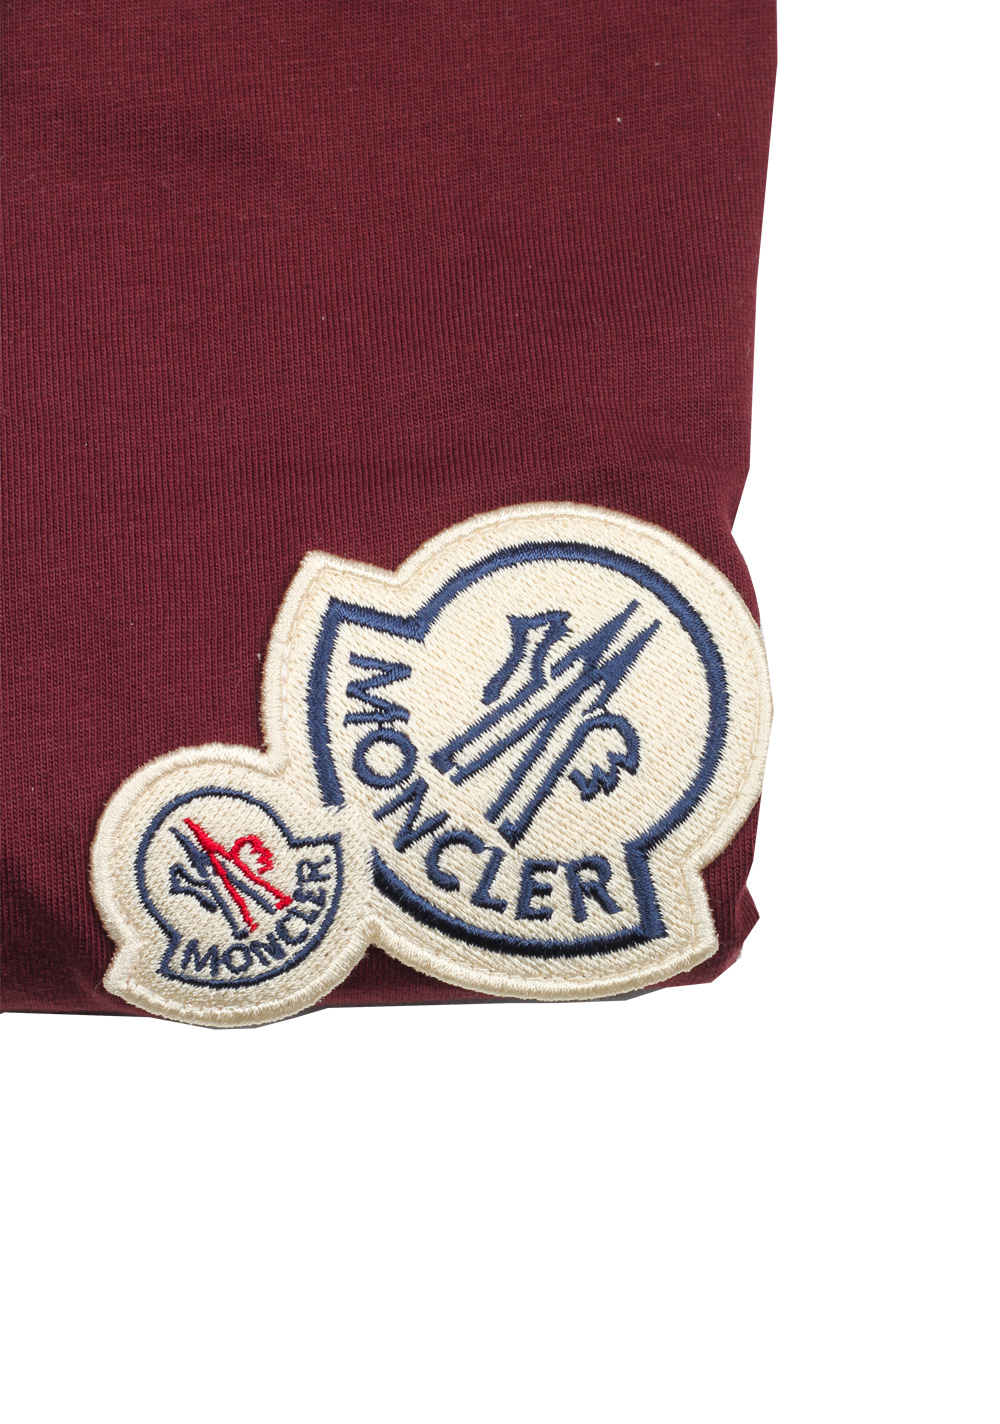 Moncler Red Brand Patch Crew Neck Tee Shirt Size XL / 42R U.S. | Costume Limité